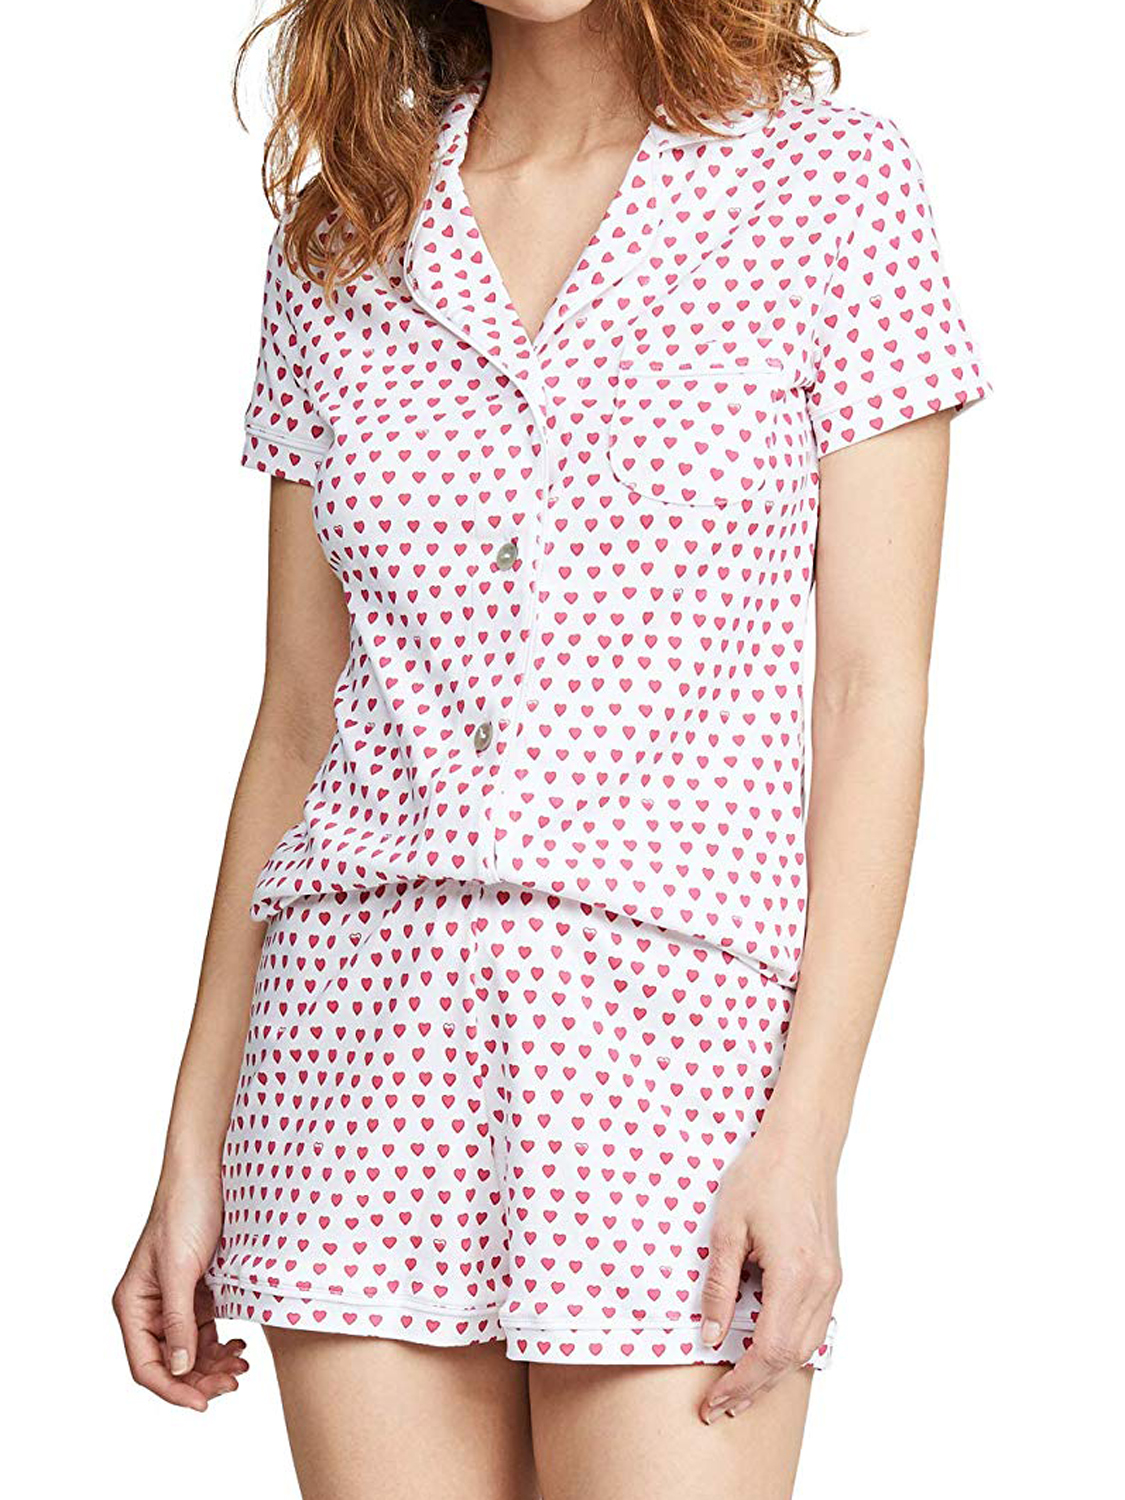 ROBERTA ROLLER RABBIT Women's Jersey Hearts Polo Pajamas $95 NEW | eBay